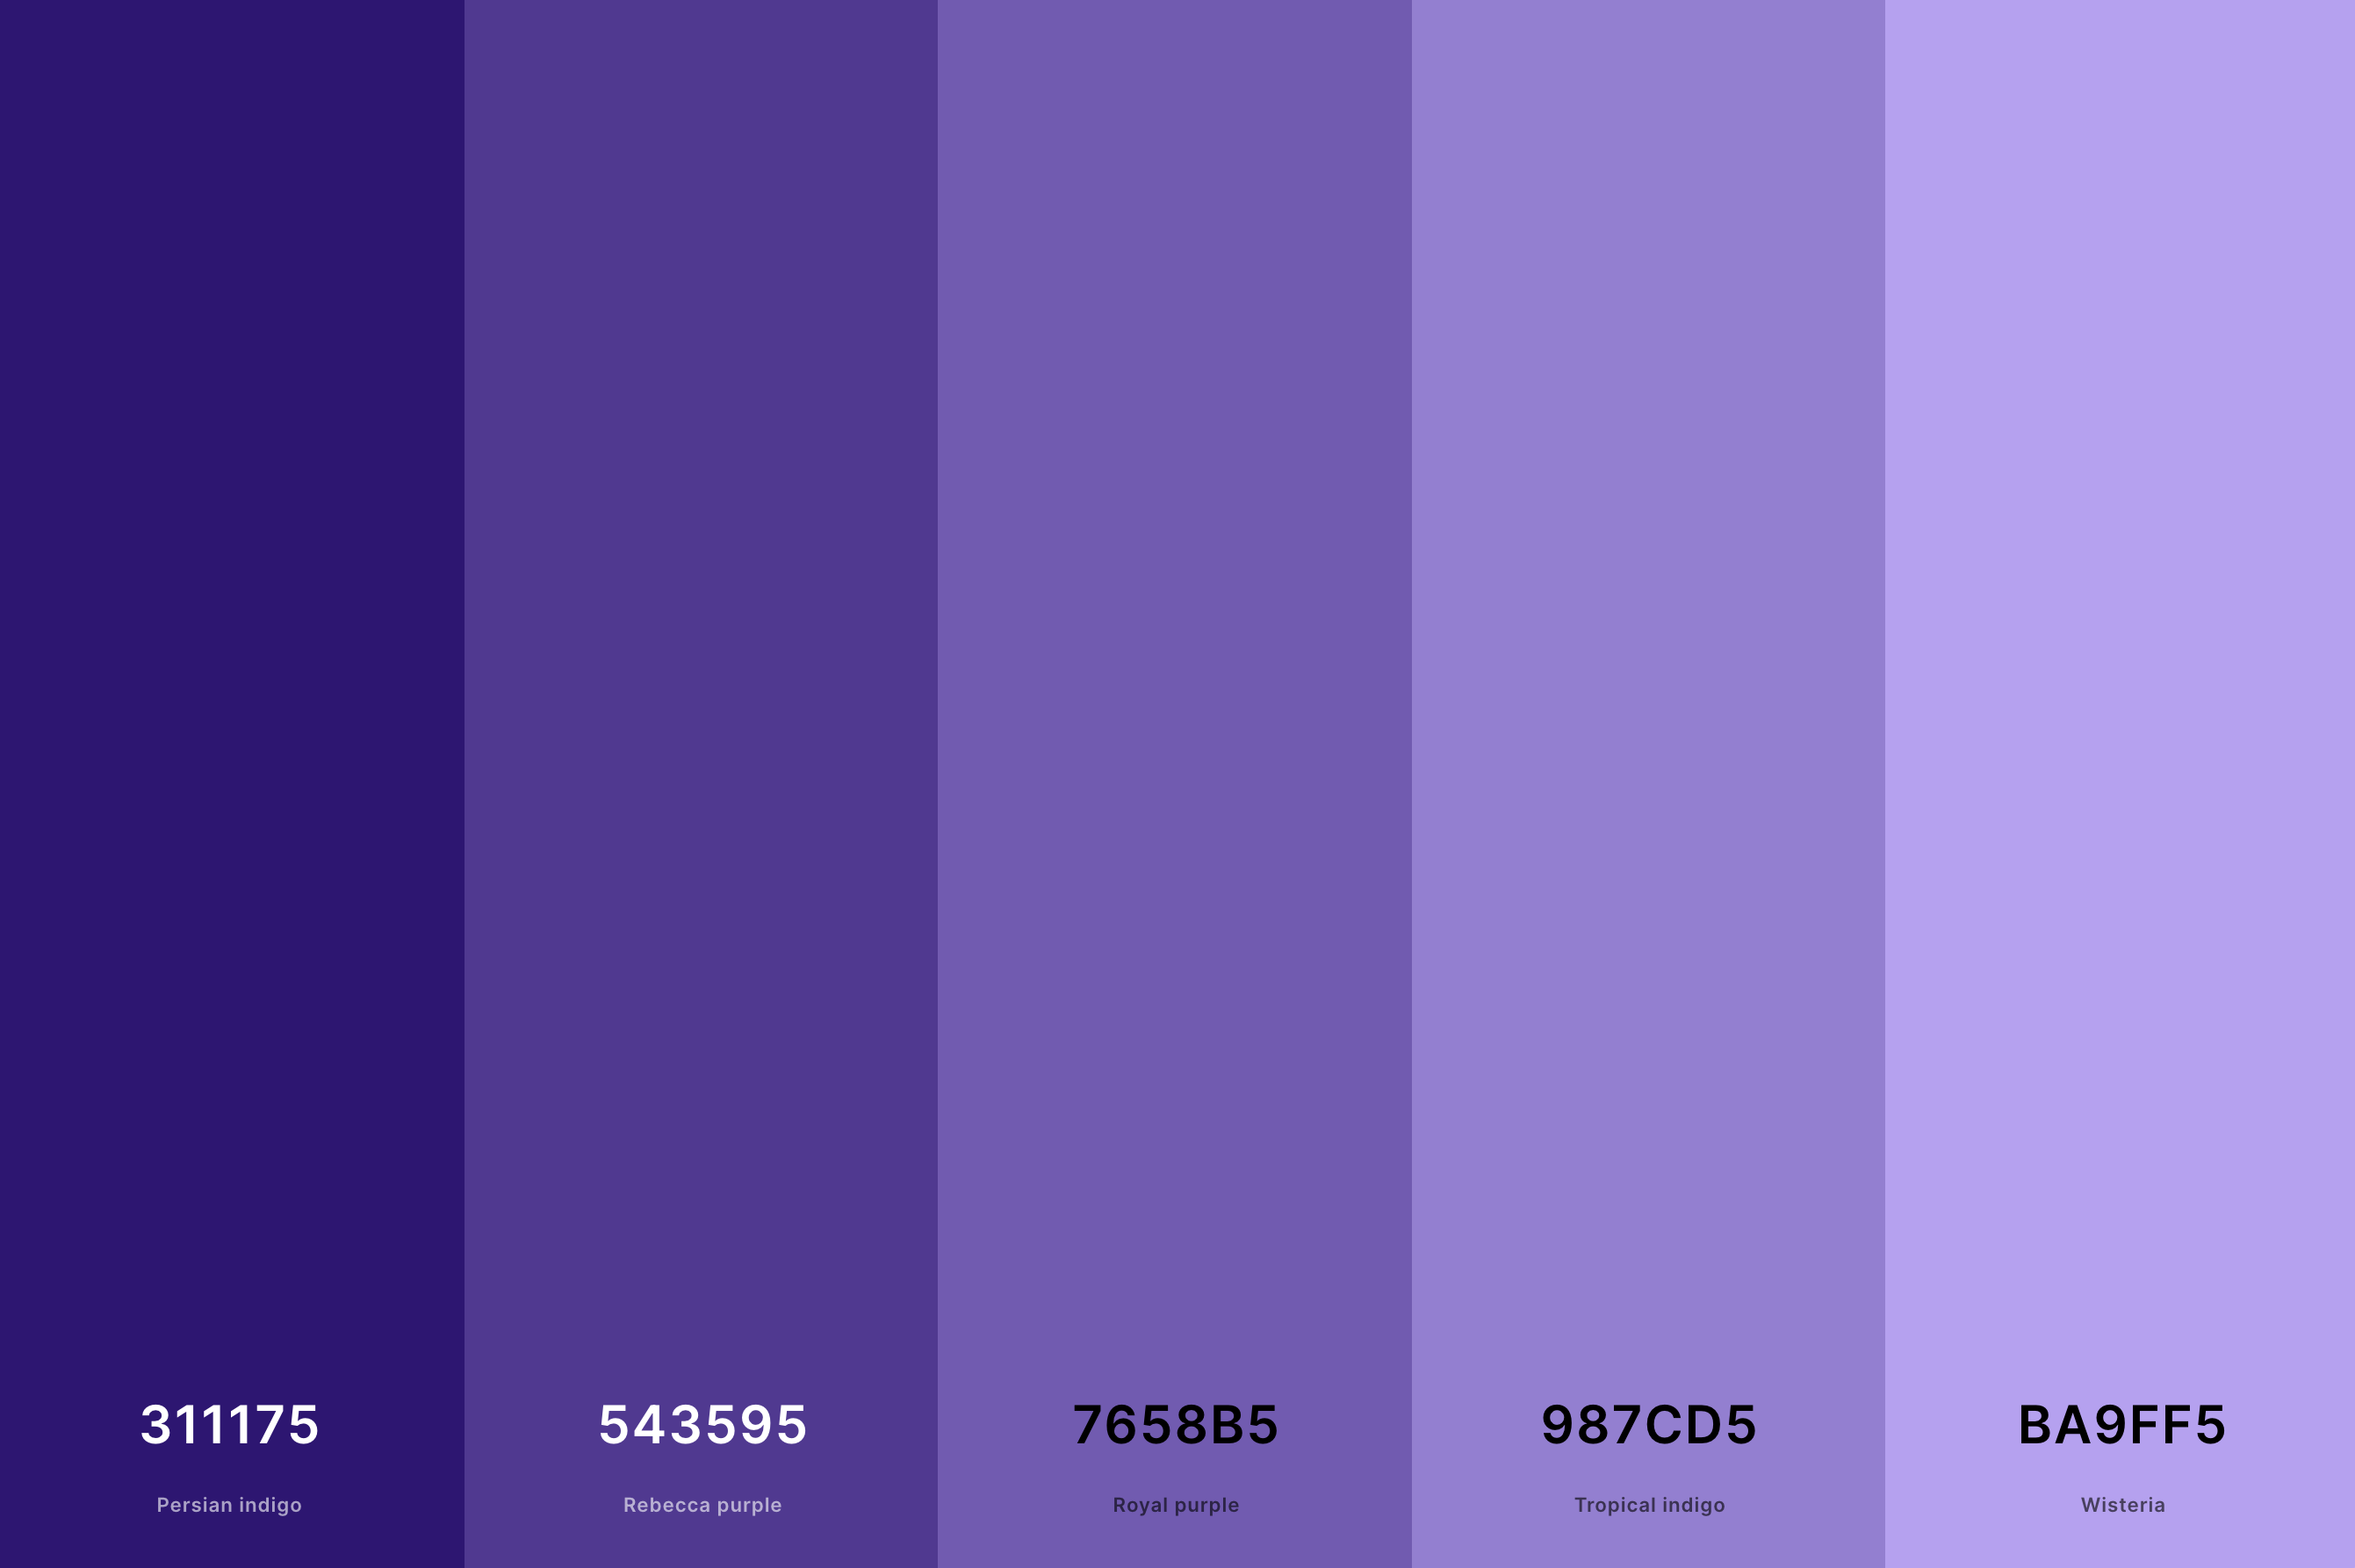 26. Persian Indigo Color Palette Color Palette with Persian Indigo (Hex #311175) + Rebecca Purple (Hex #543595) + Royal Purple (Hex #7658B5) + Tropical Indigo (Hex #987CD5) + Wisteria (Hex #BA9FF5) Color Palette with Hex Codes